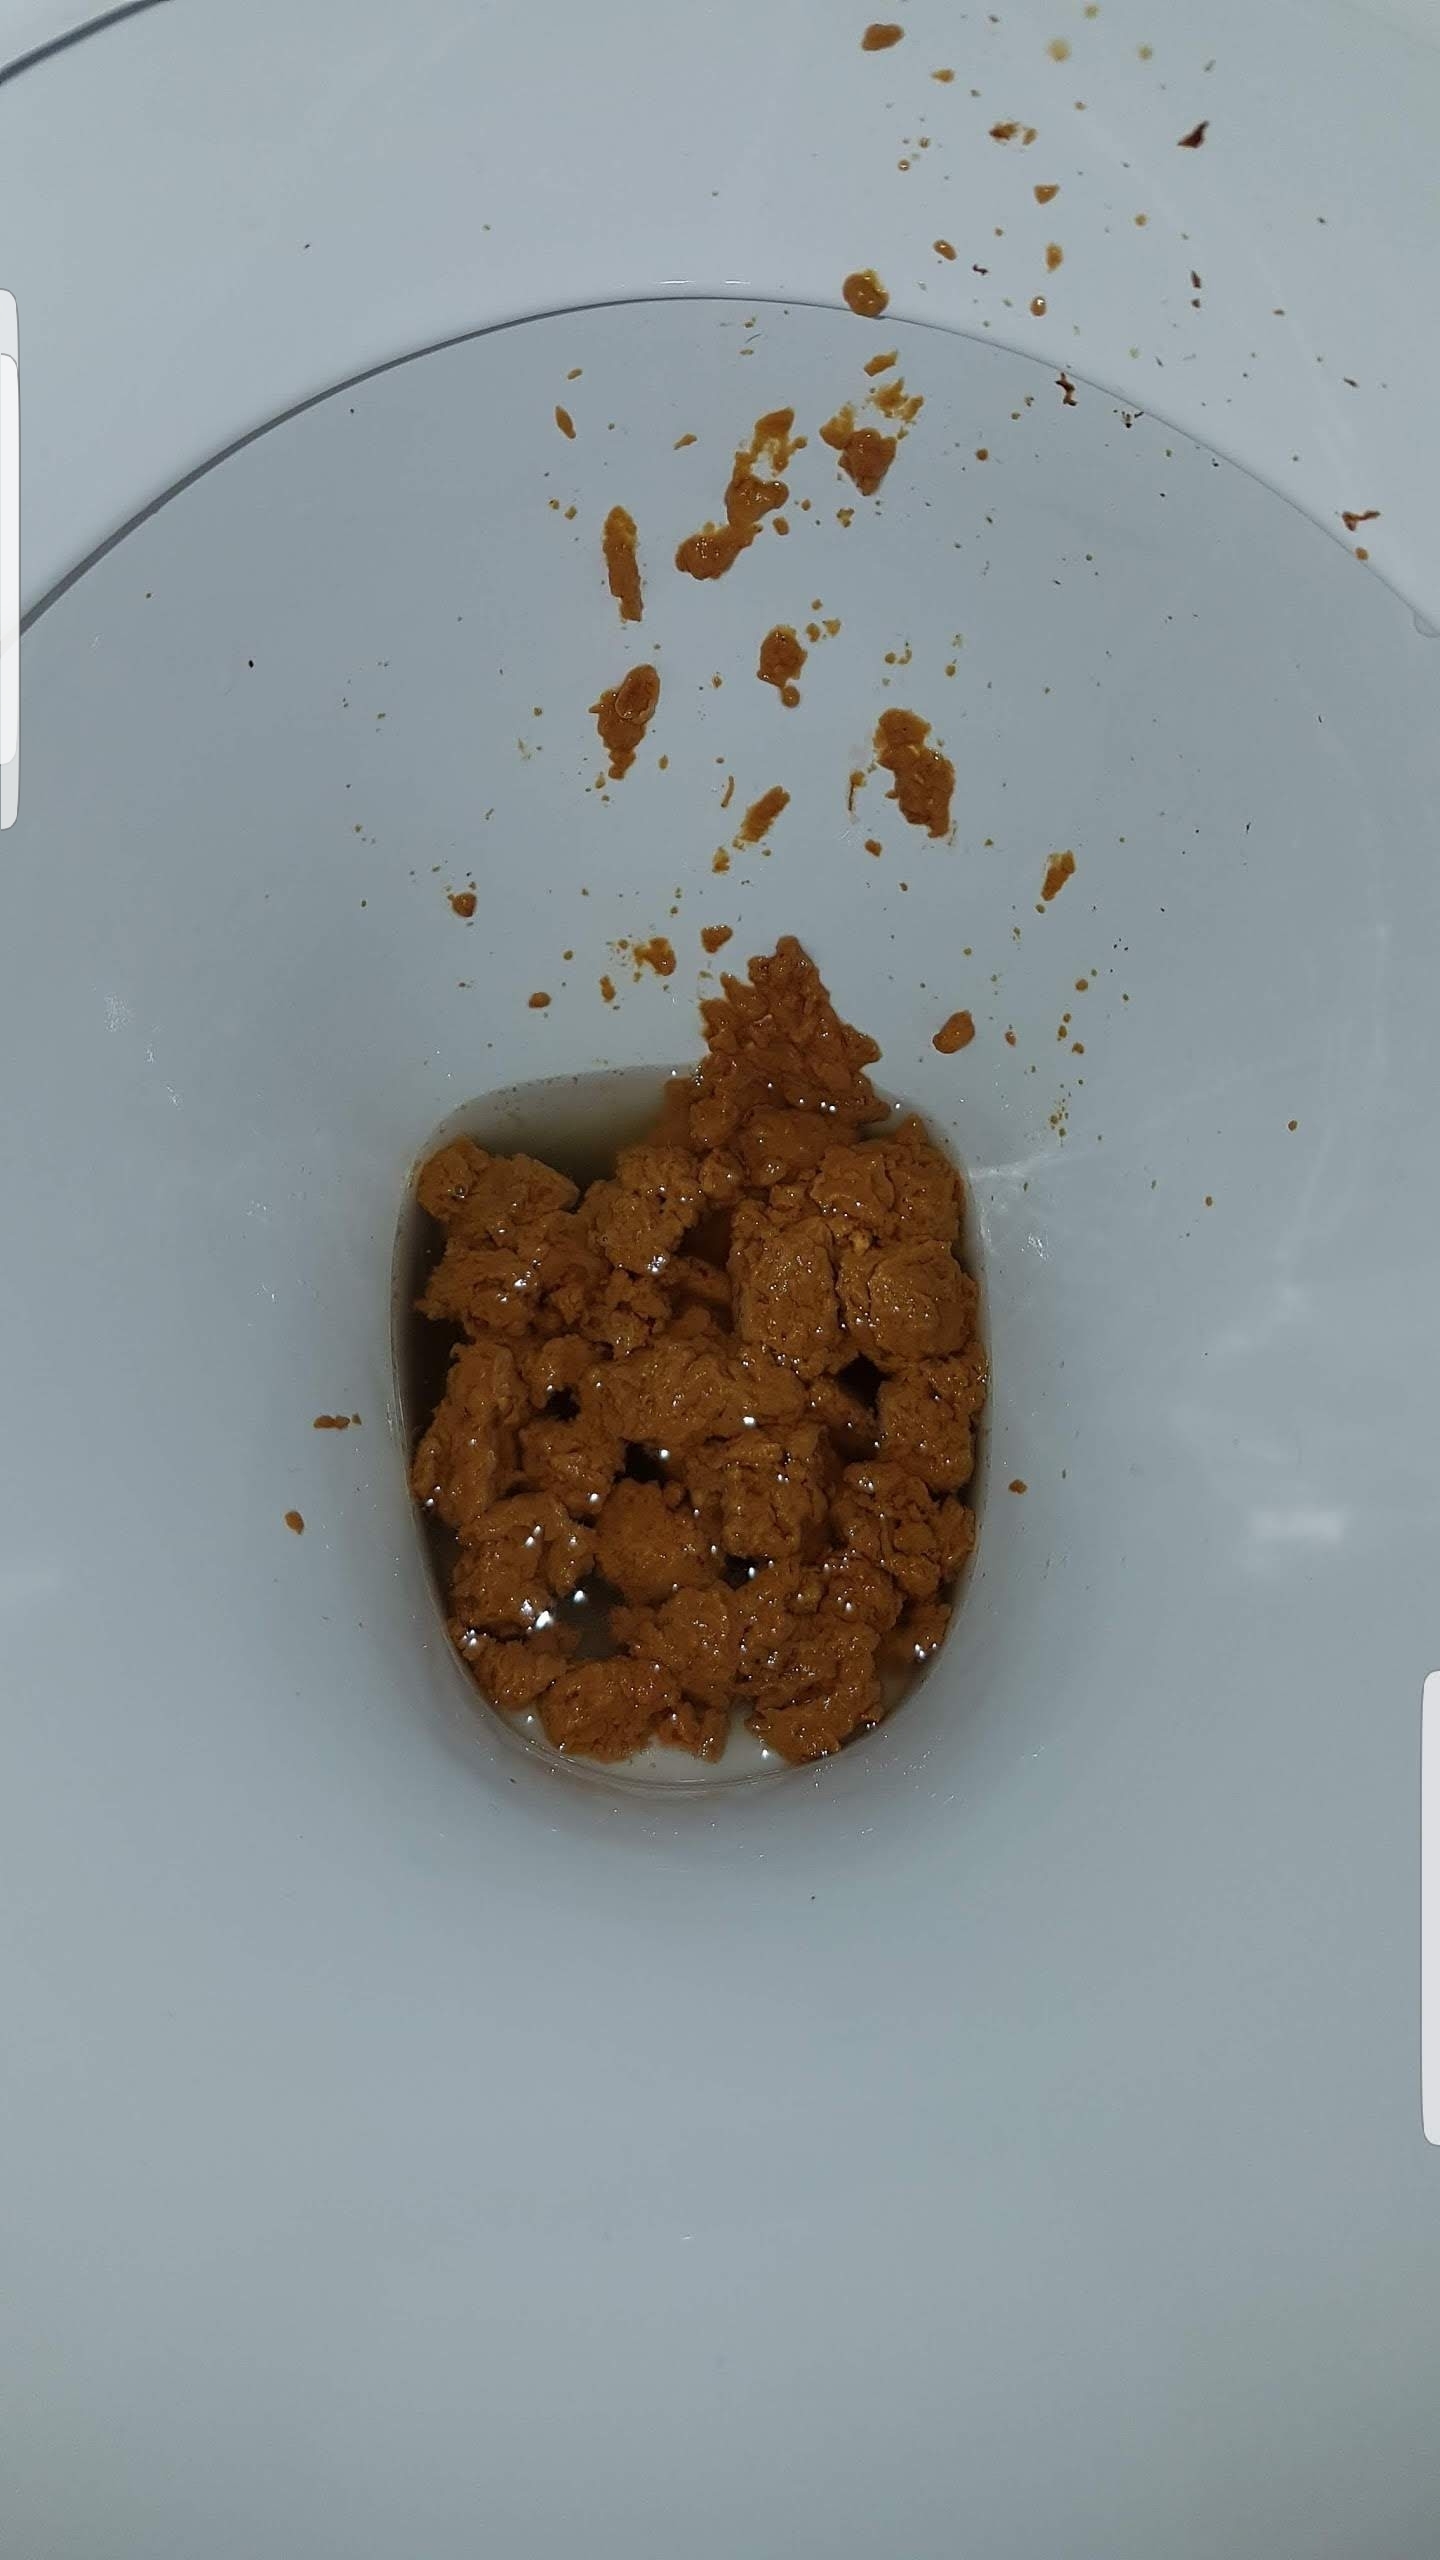 Sunday morning sloppy farty hangover shit on mates toilet